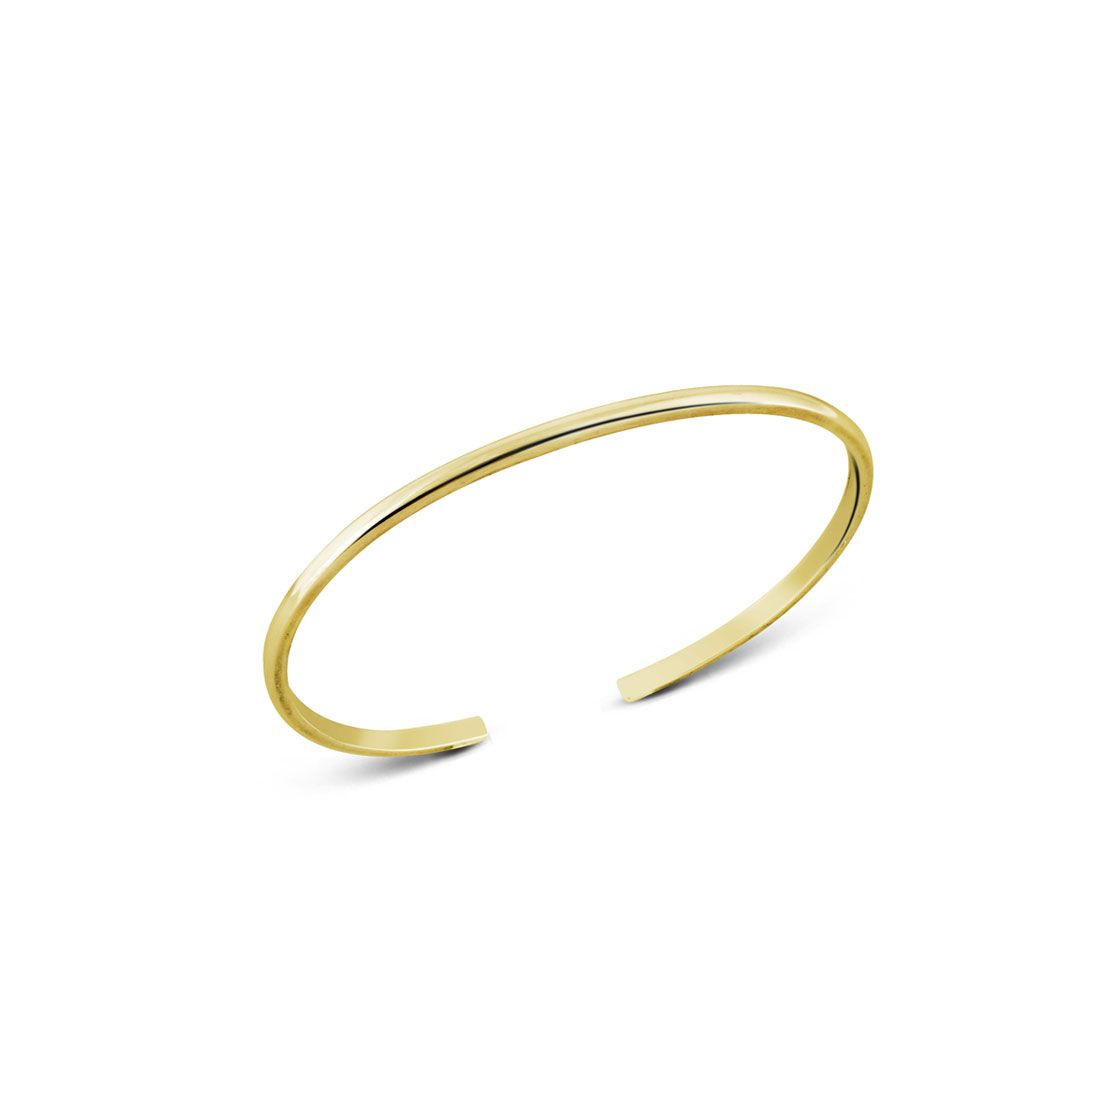 A beautifull and elegant shiny gold cuff bracelet